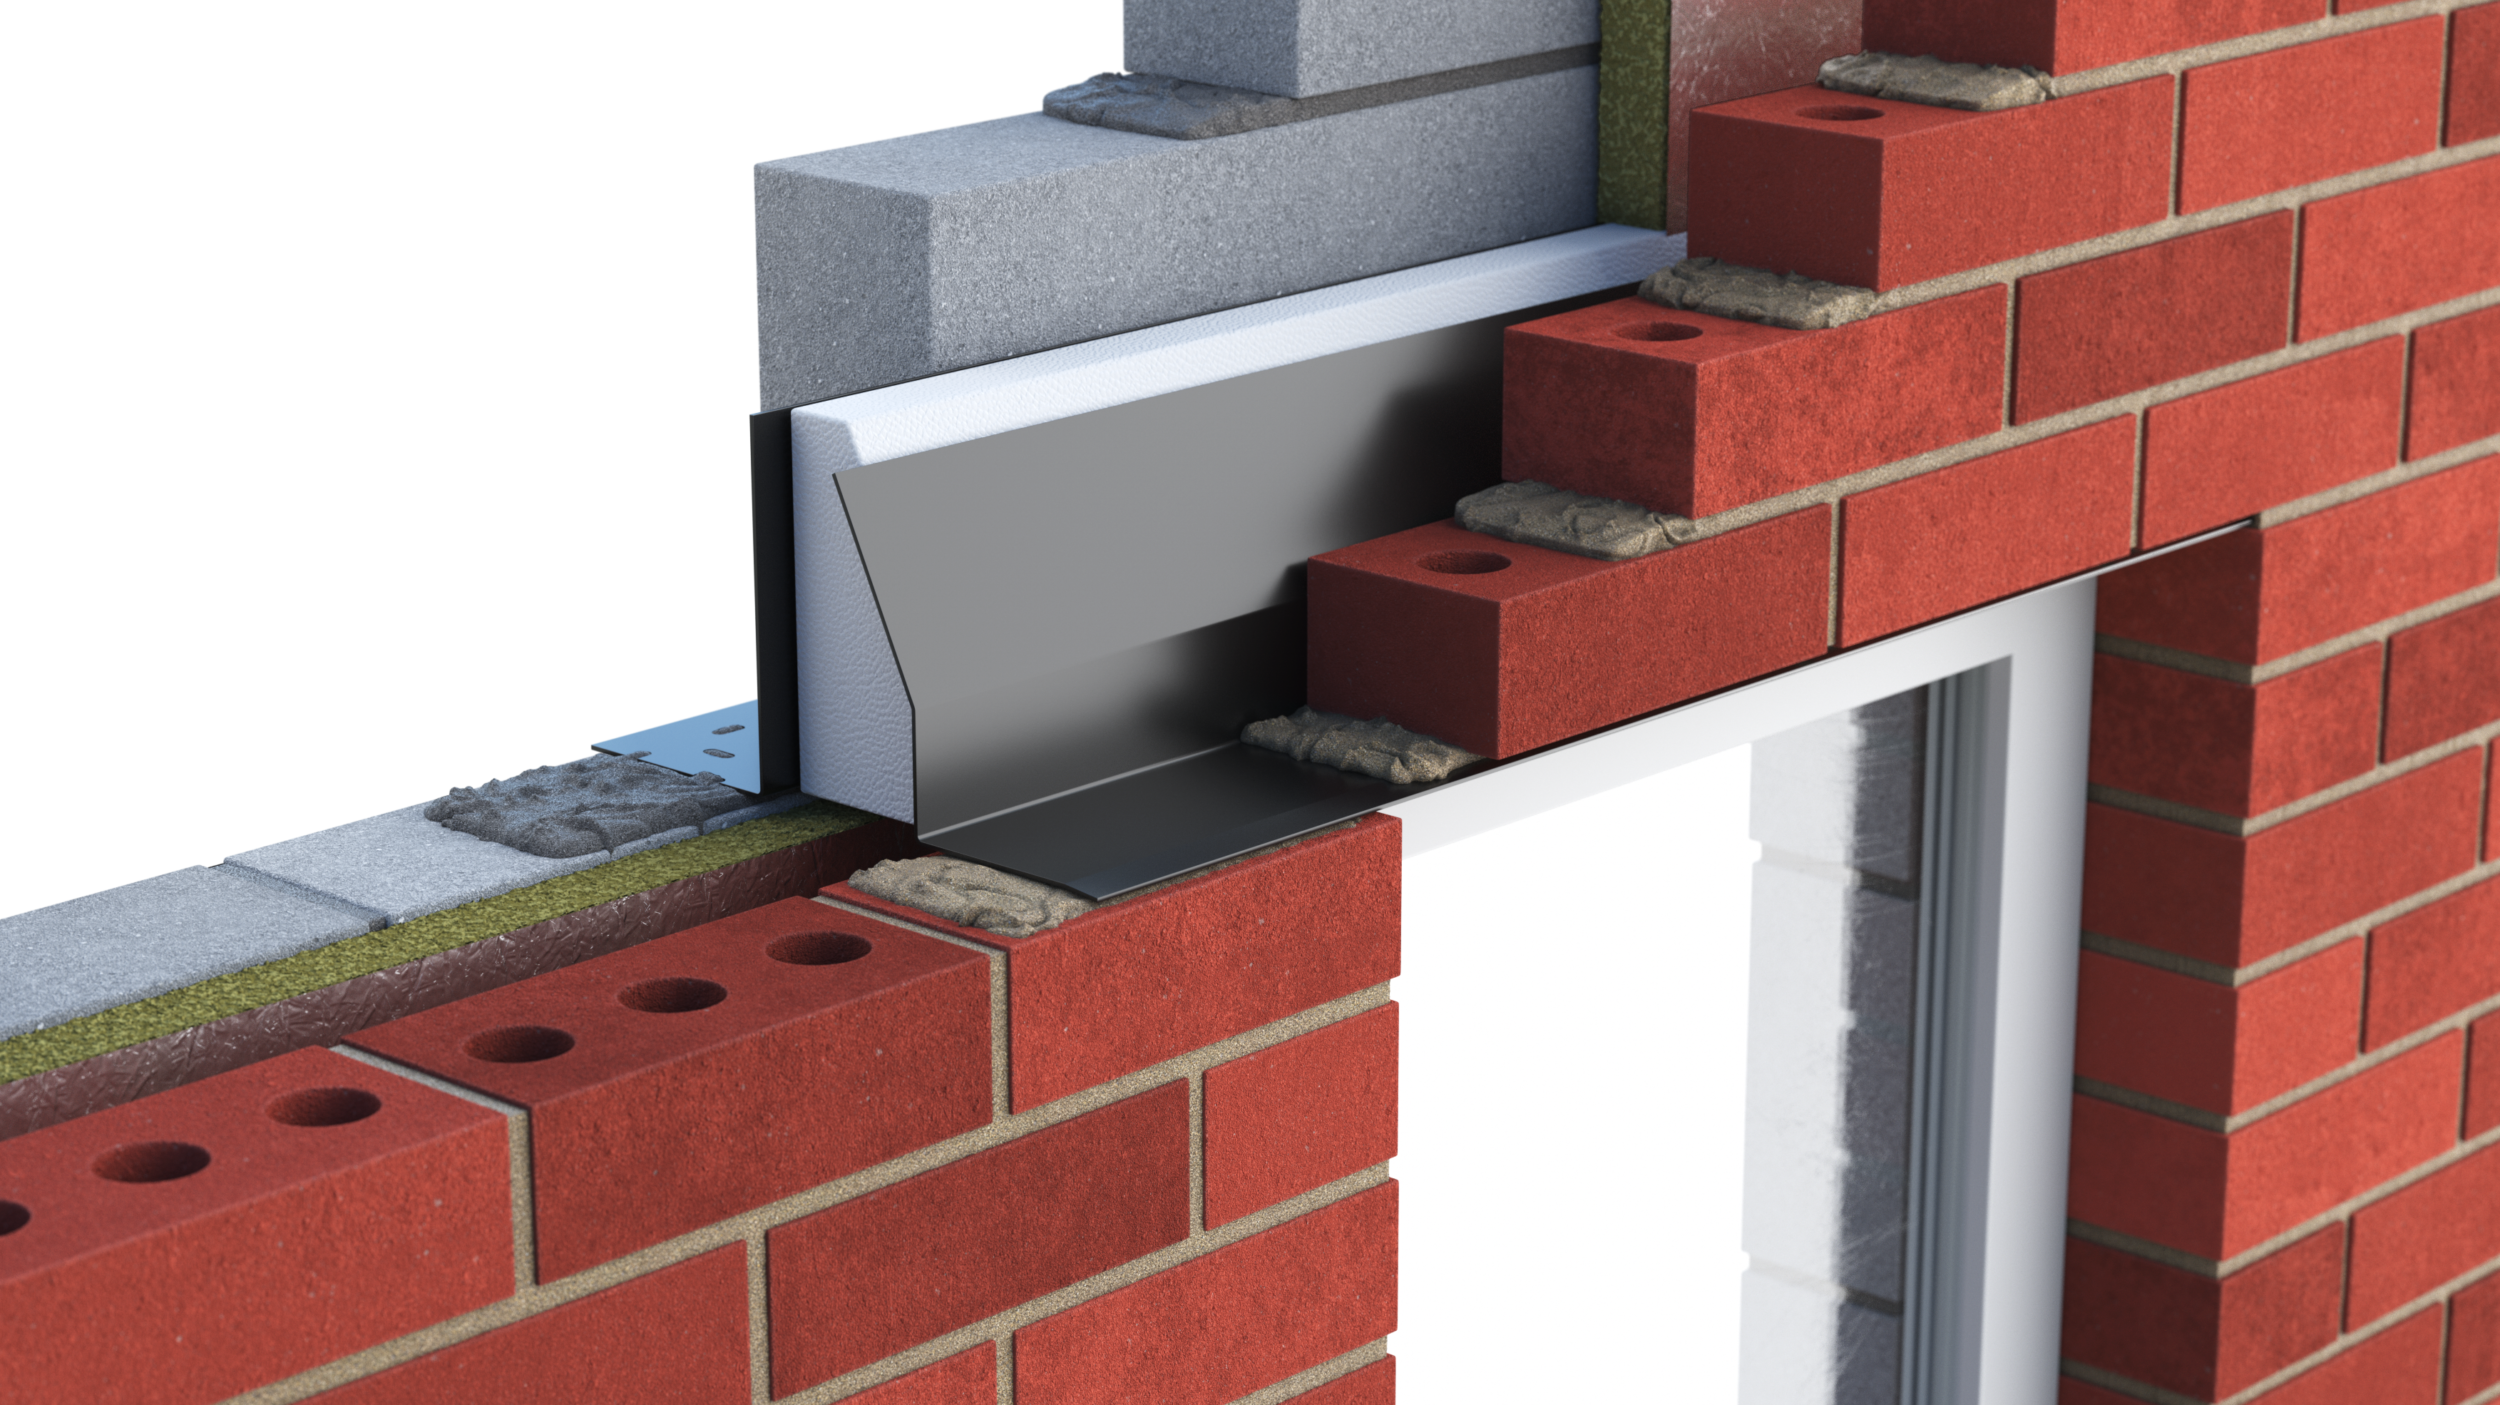 Steel lintel for cavity wall construction